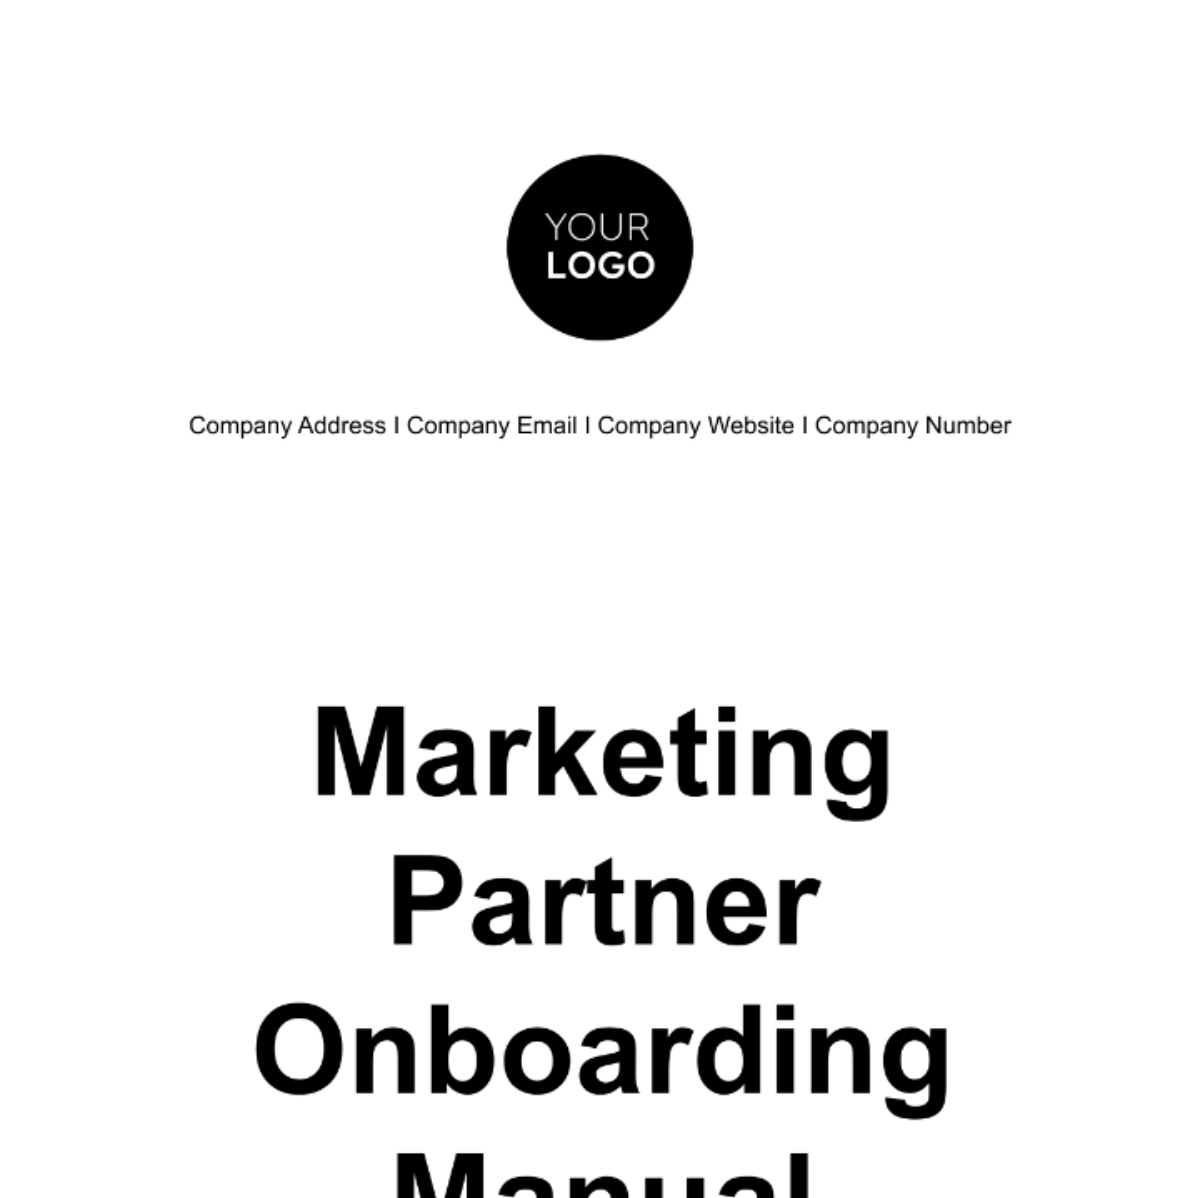 Marketing Partner Onboarding Manual Template